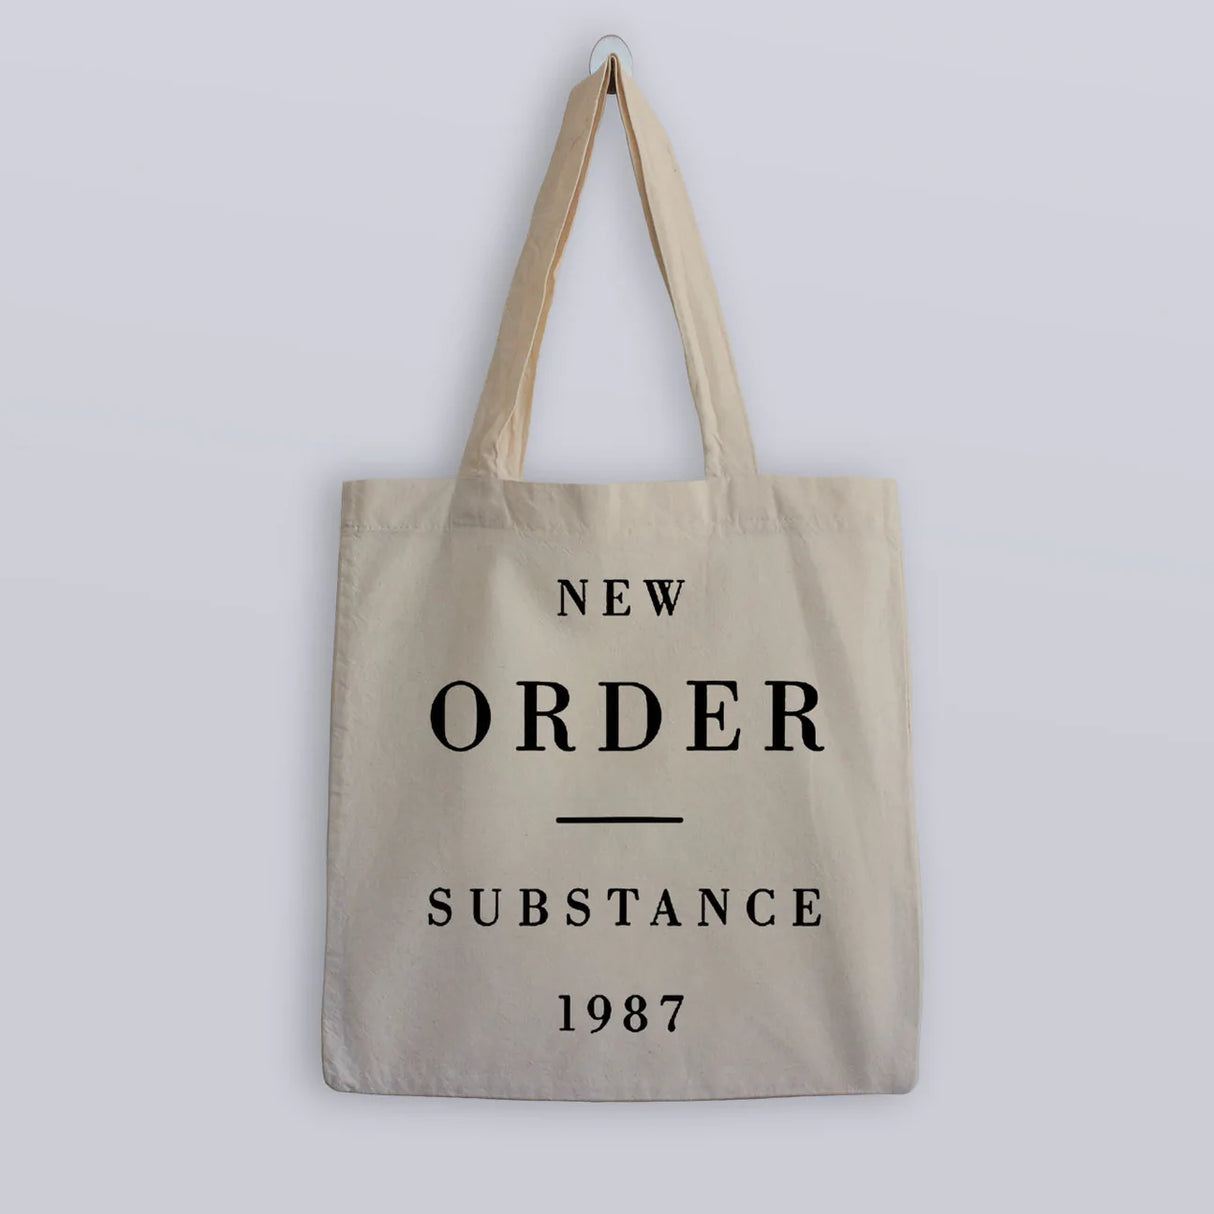 New Order Substance 1987 Tote Bag